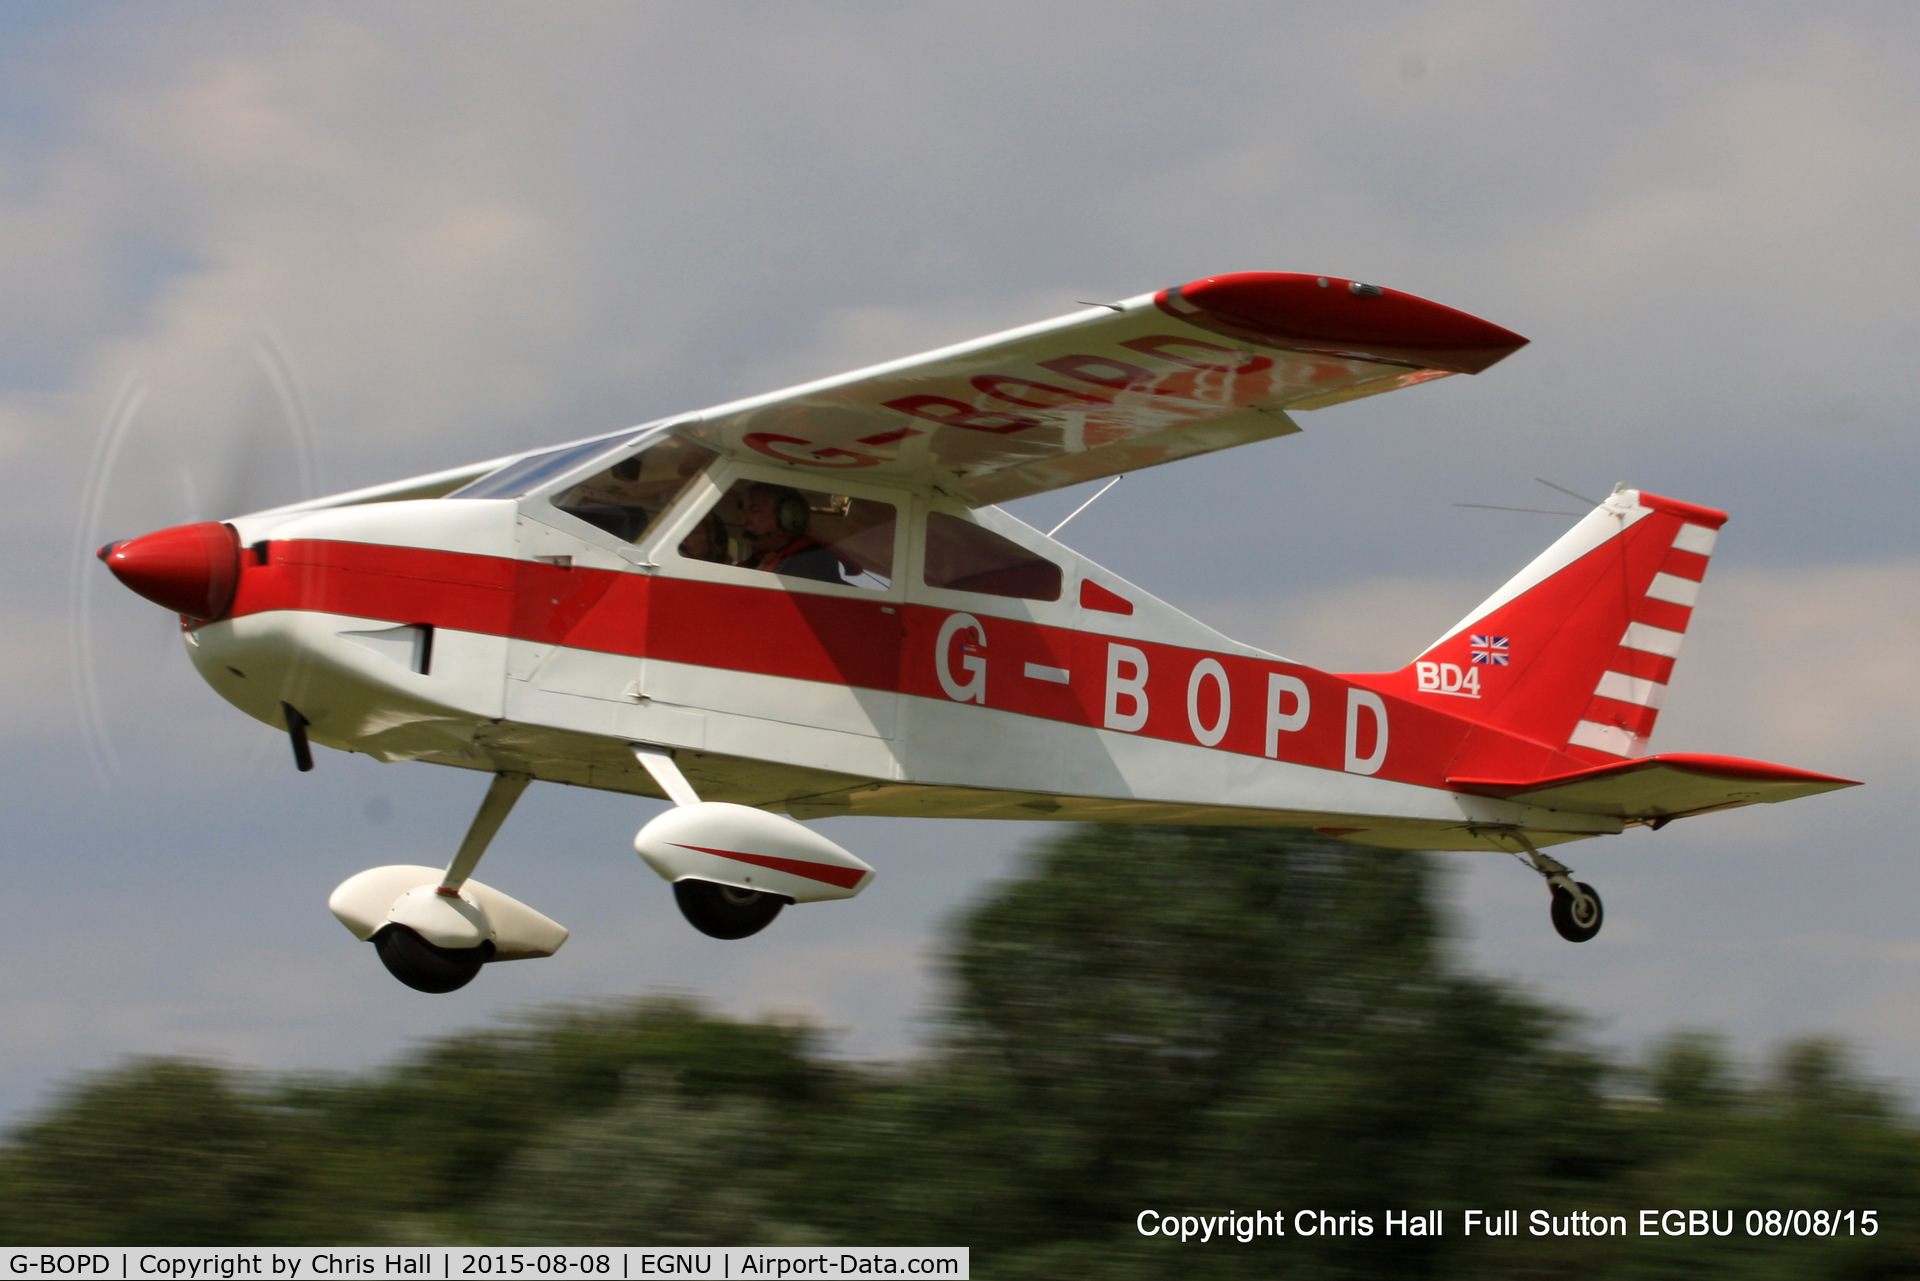 G-BOPD, 1974 Bede BD-4 C/N 632, at the Vale of York LAA strut flyin, Full Sutton